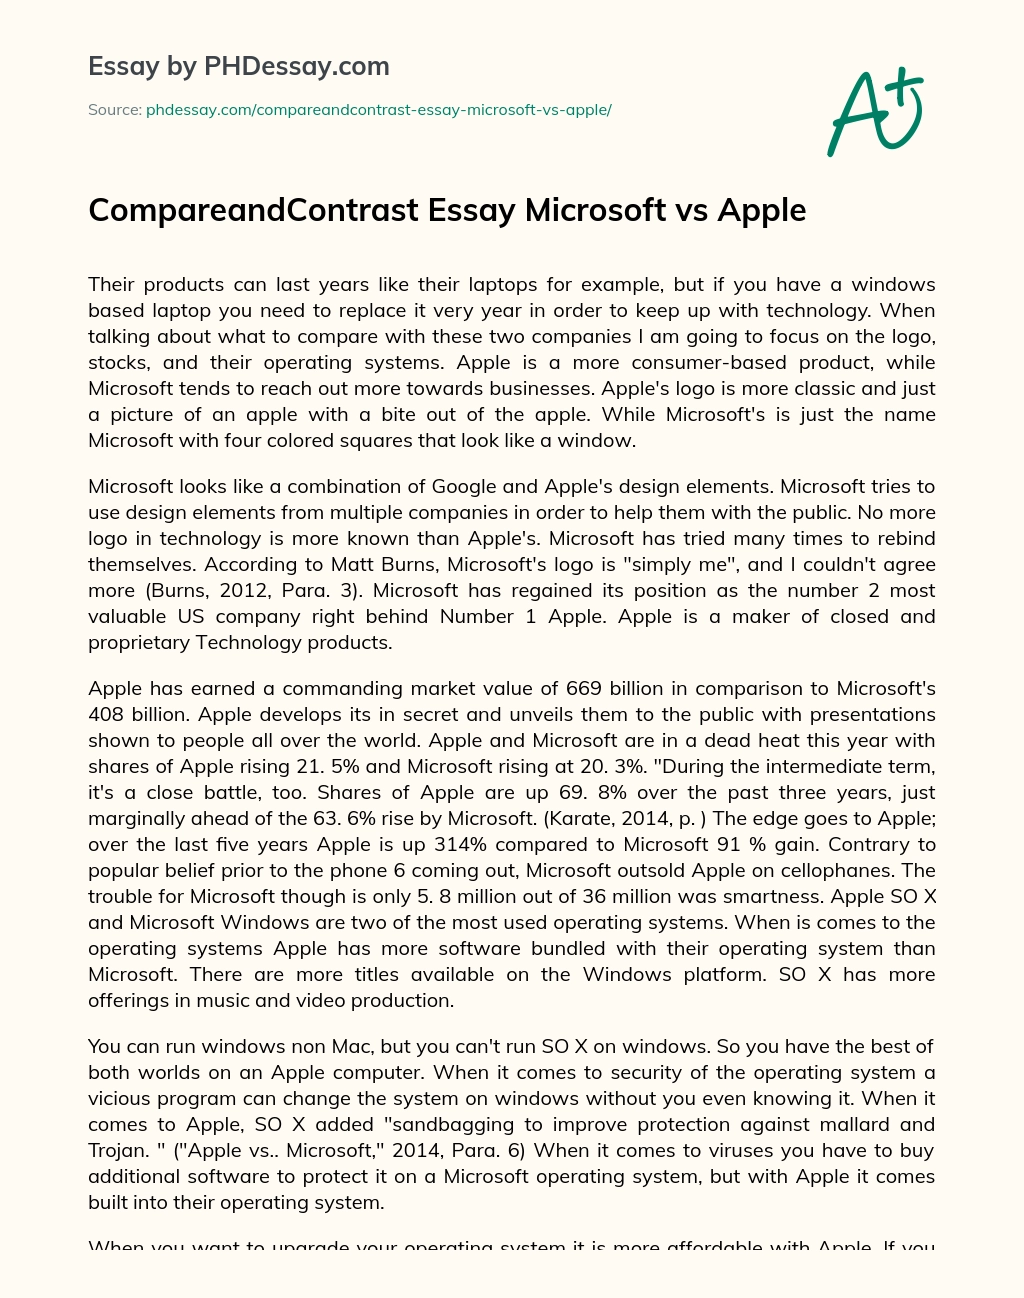 CompareandContrast Essay Microsoft vs Apple essay